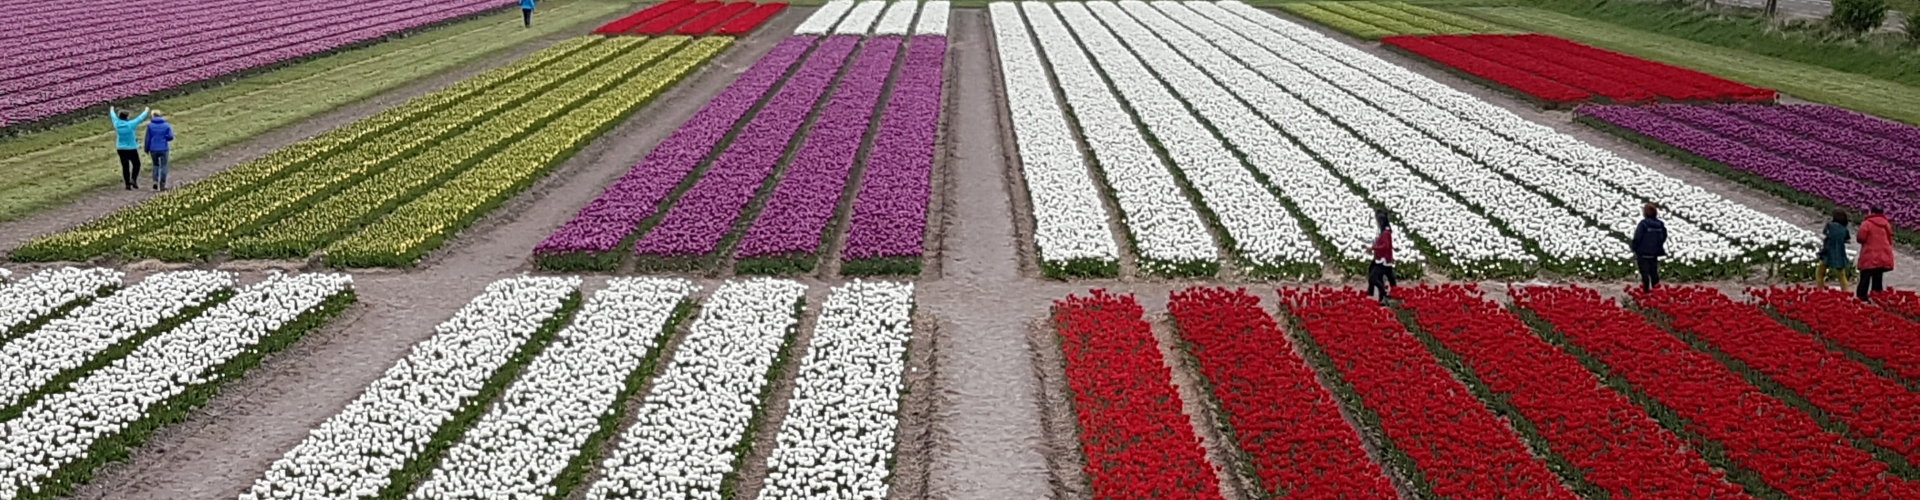 Tulip mosaic planted at Noordoostpolder Holland